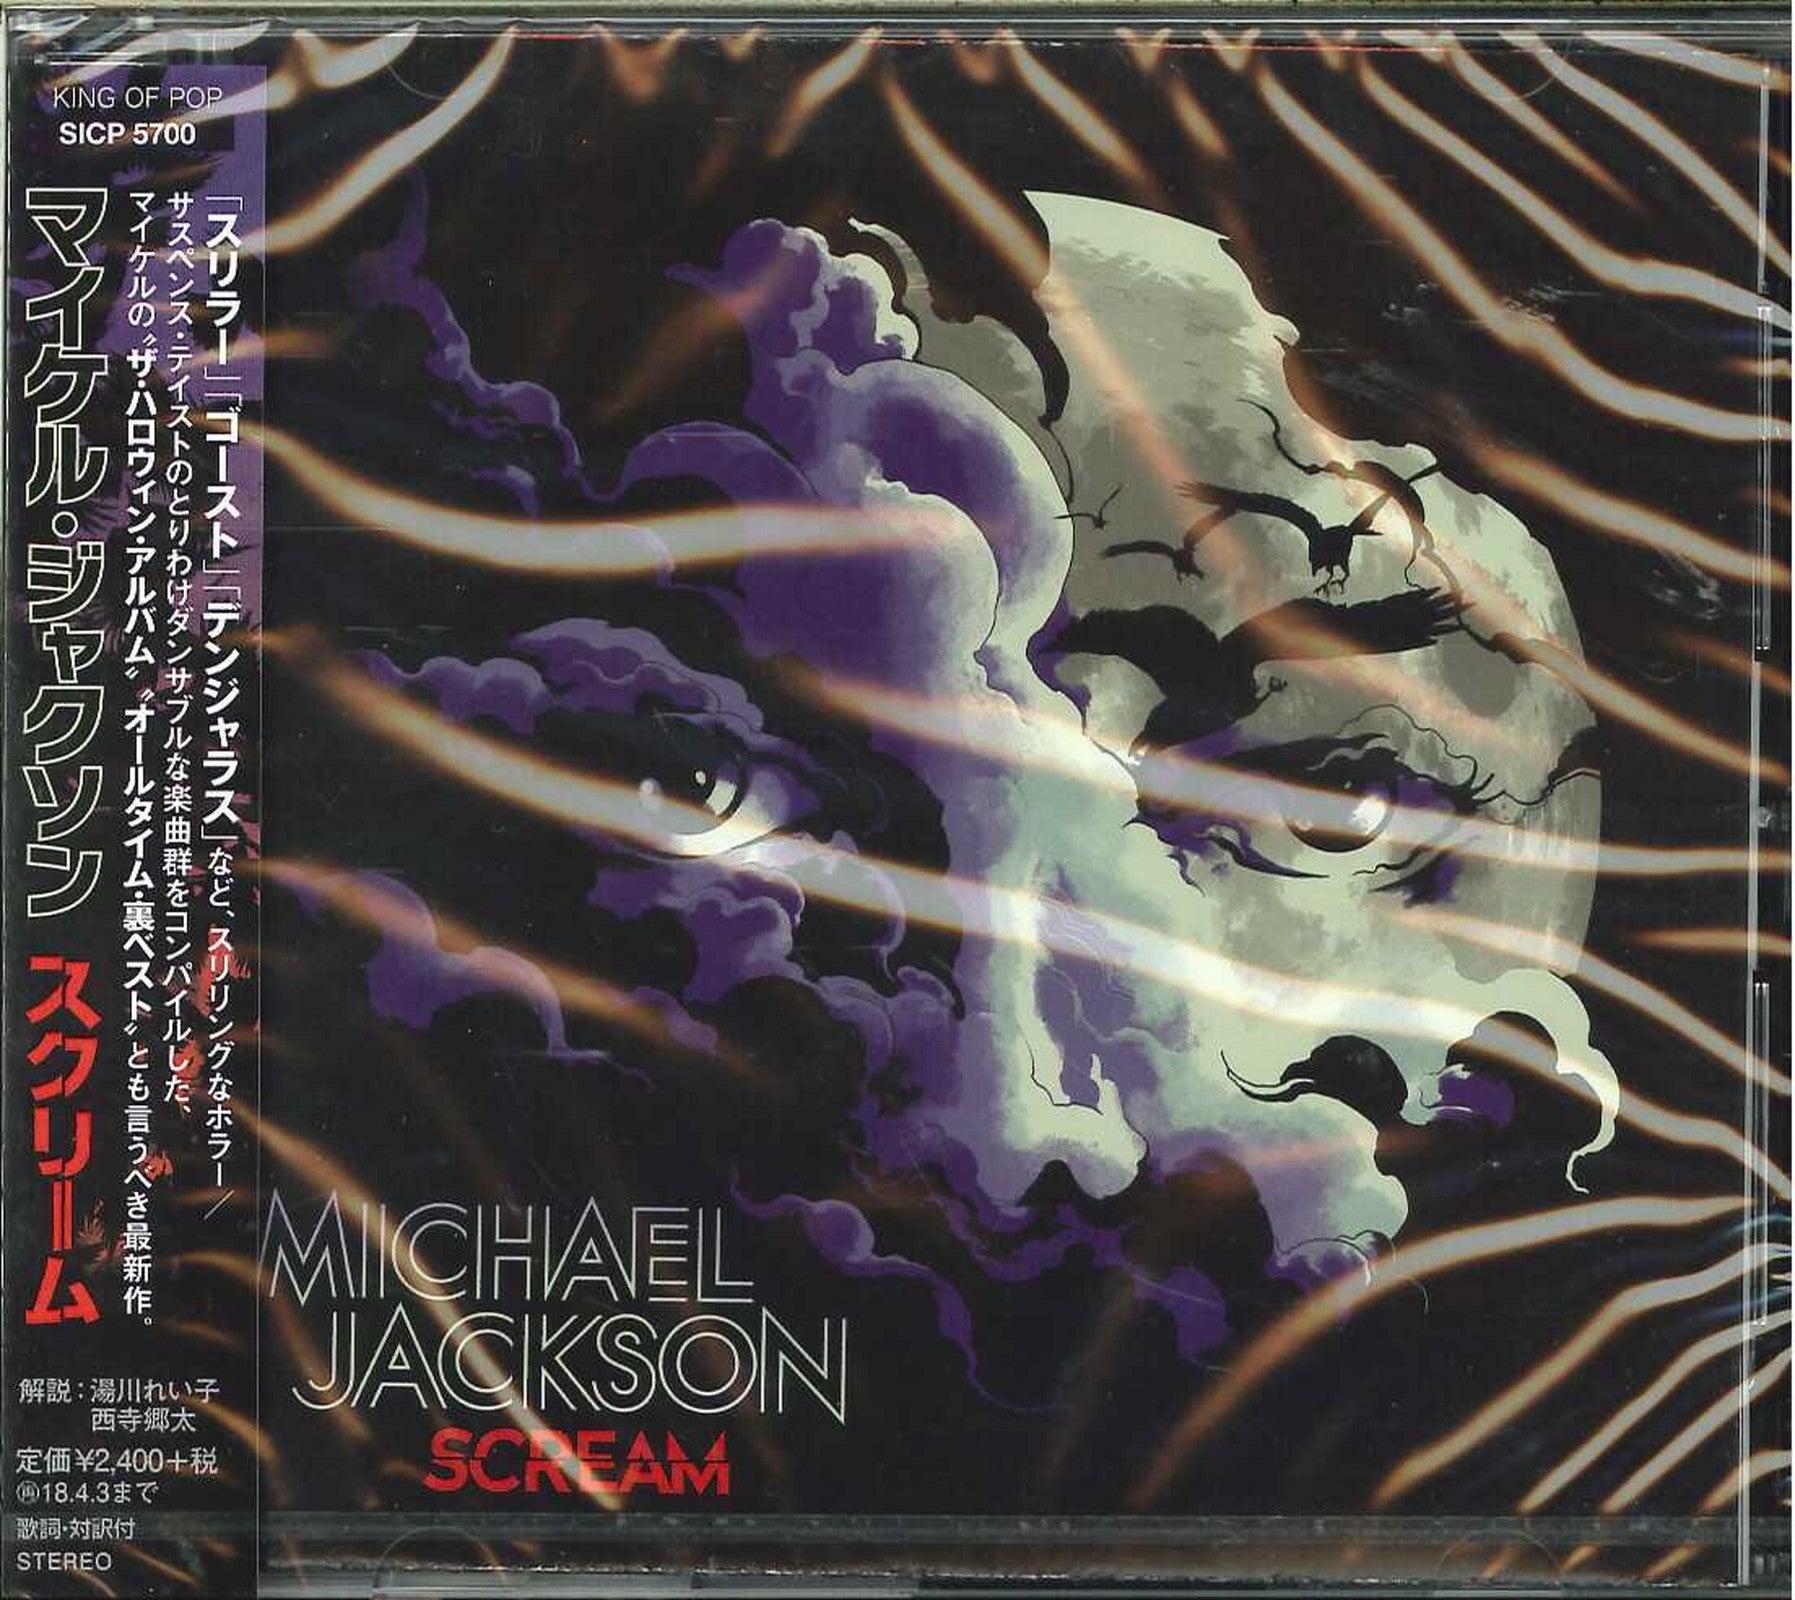 Michael Jackson - Scream - Japan CD Bonus Track – CDs Vinyl Japan Store  1970s, 2017, CD, Jewel case, Michael Jackson, Pop 1970s CDs